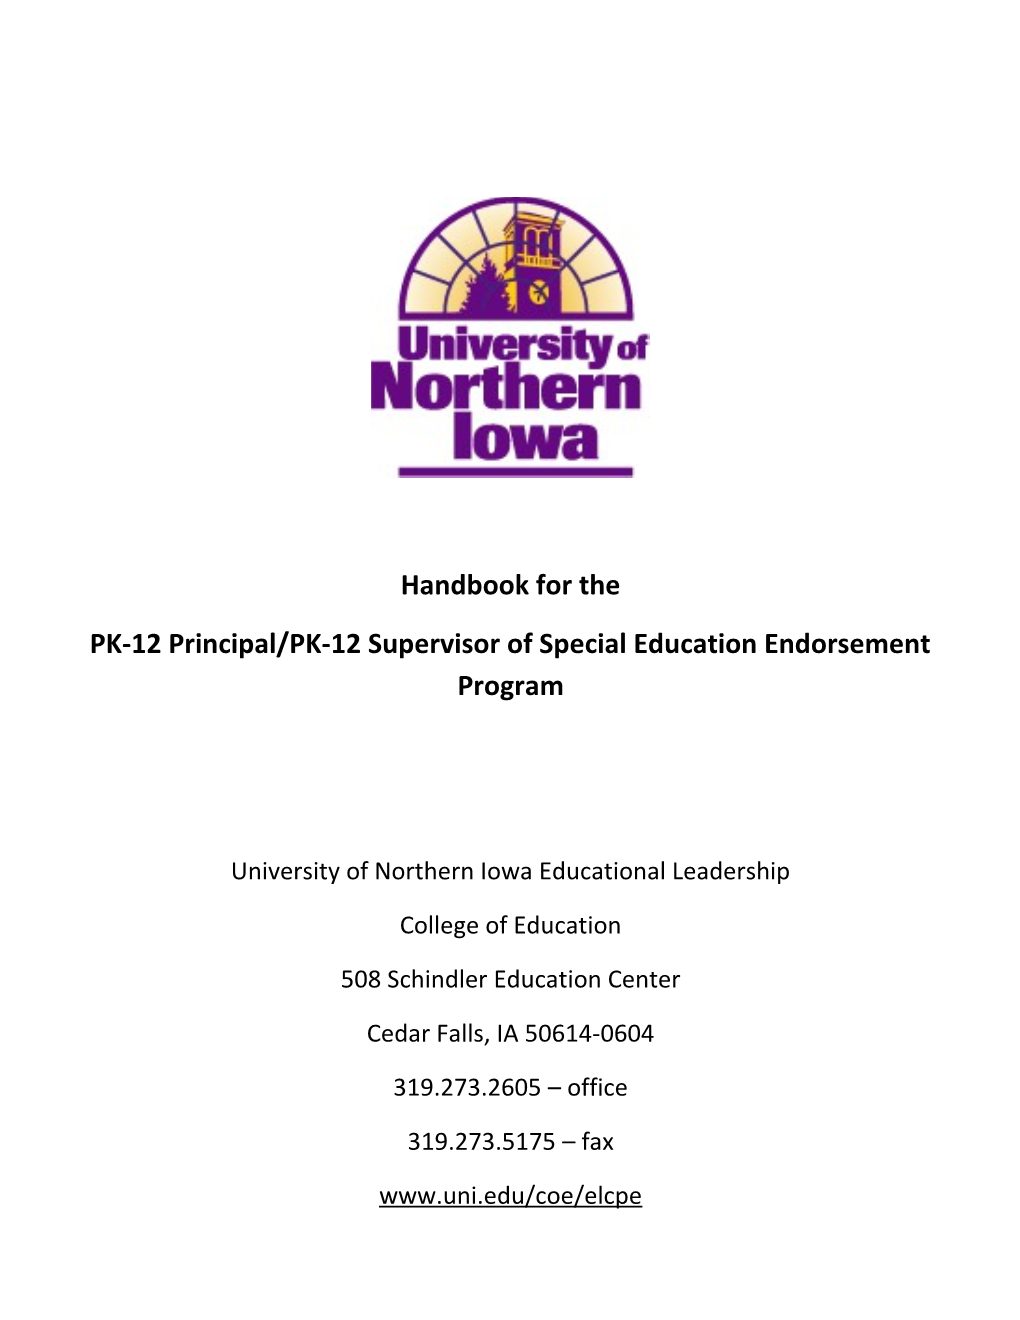 PK-12 Principal/PK-12 Supervisor of Special Education Endorsement Program